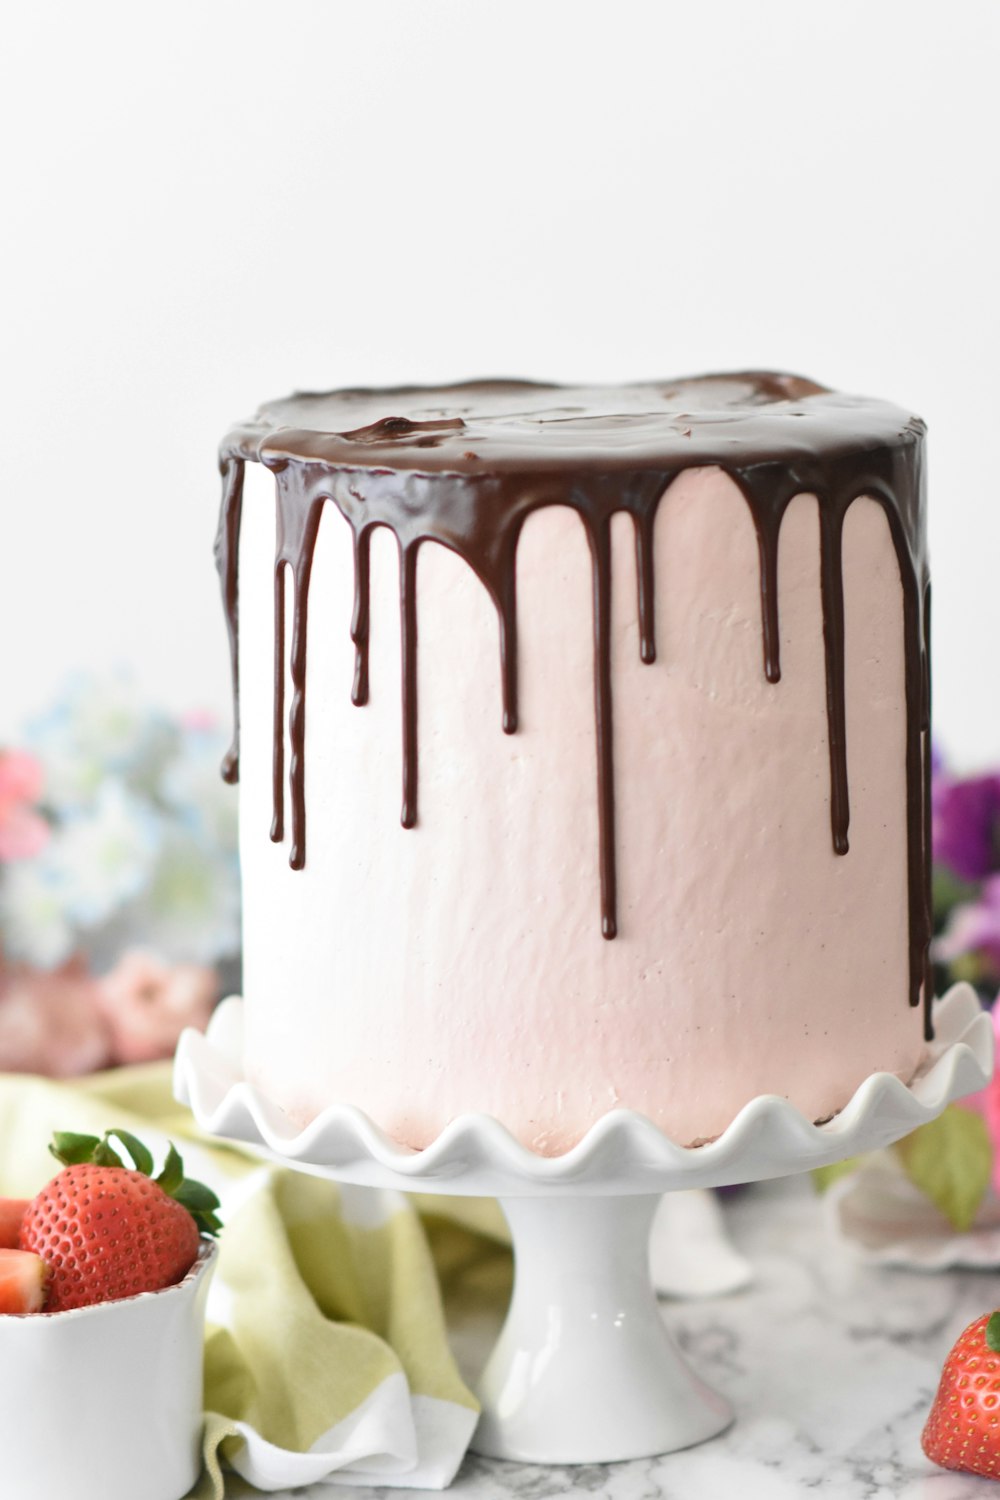 gâteau rose au chocolat sur plateau